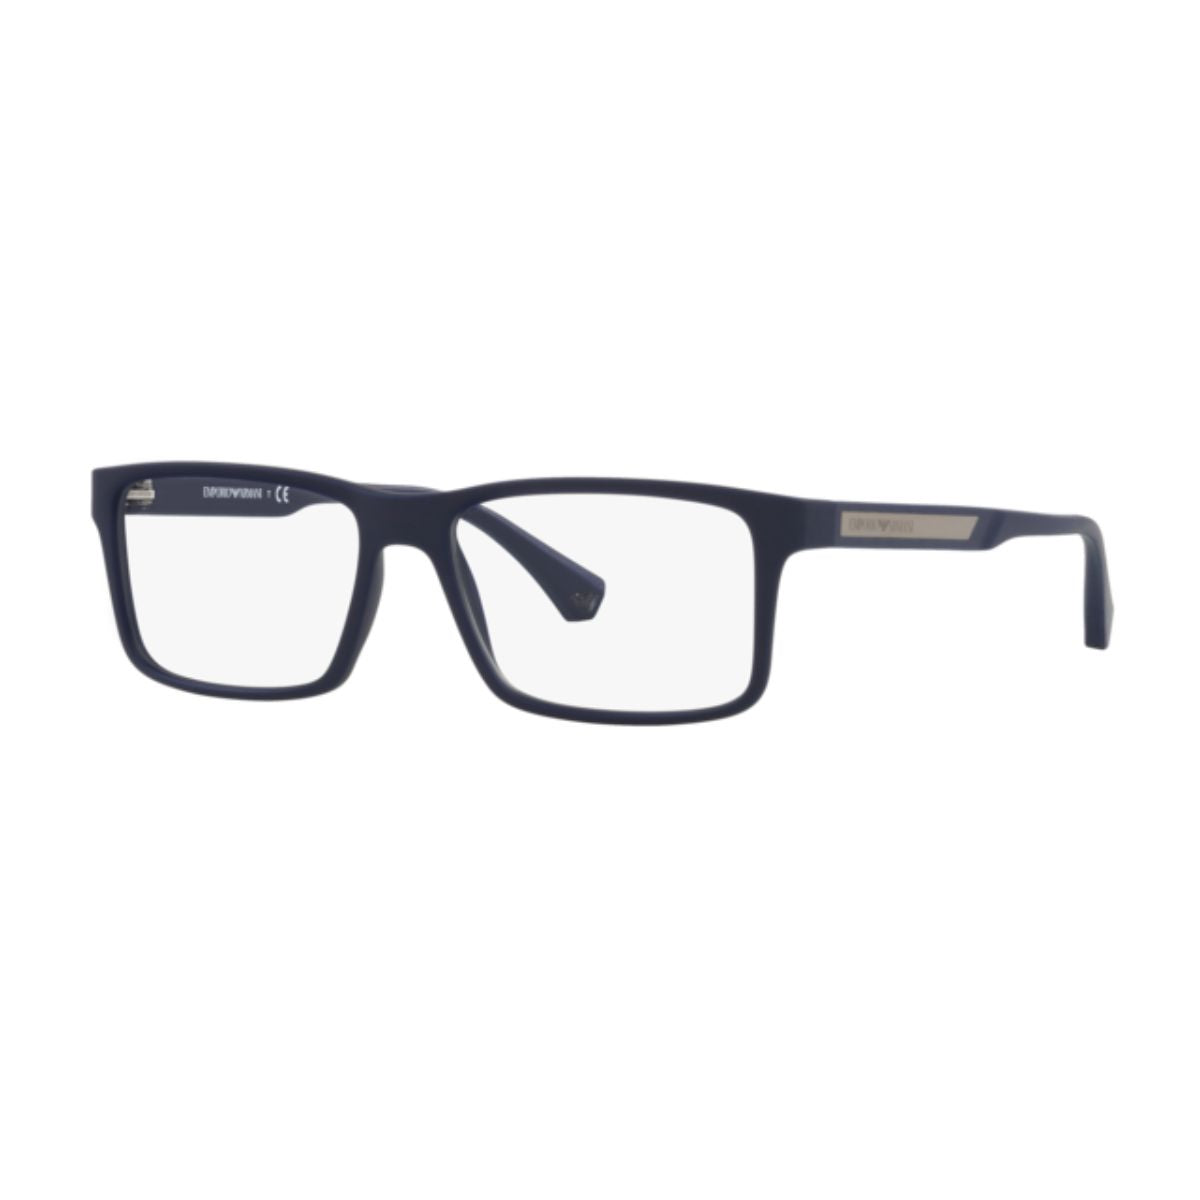 "Shop Emporio Armani 3038 5754 Eye Sight Glasses Frame For Men's At Optorium"